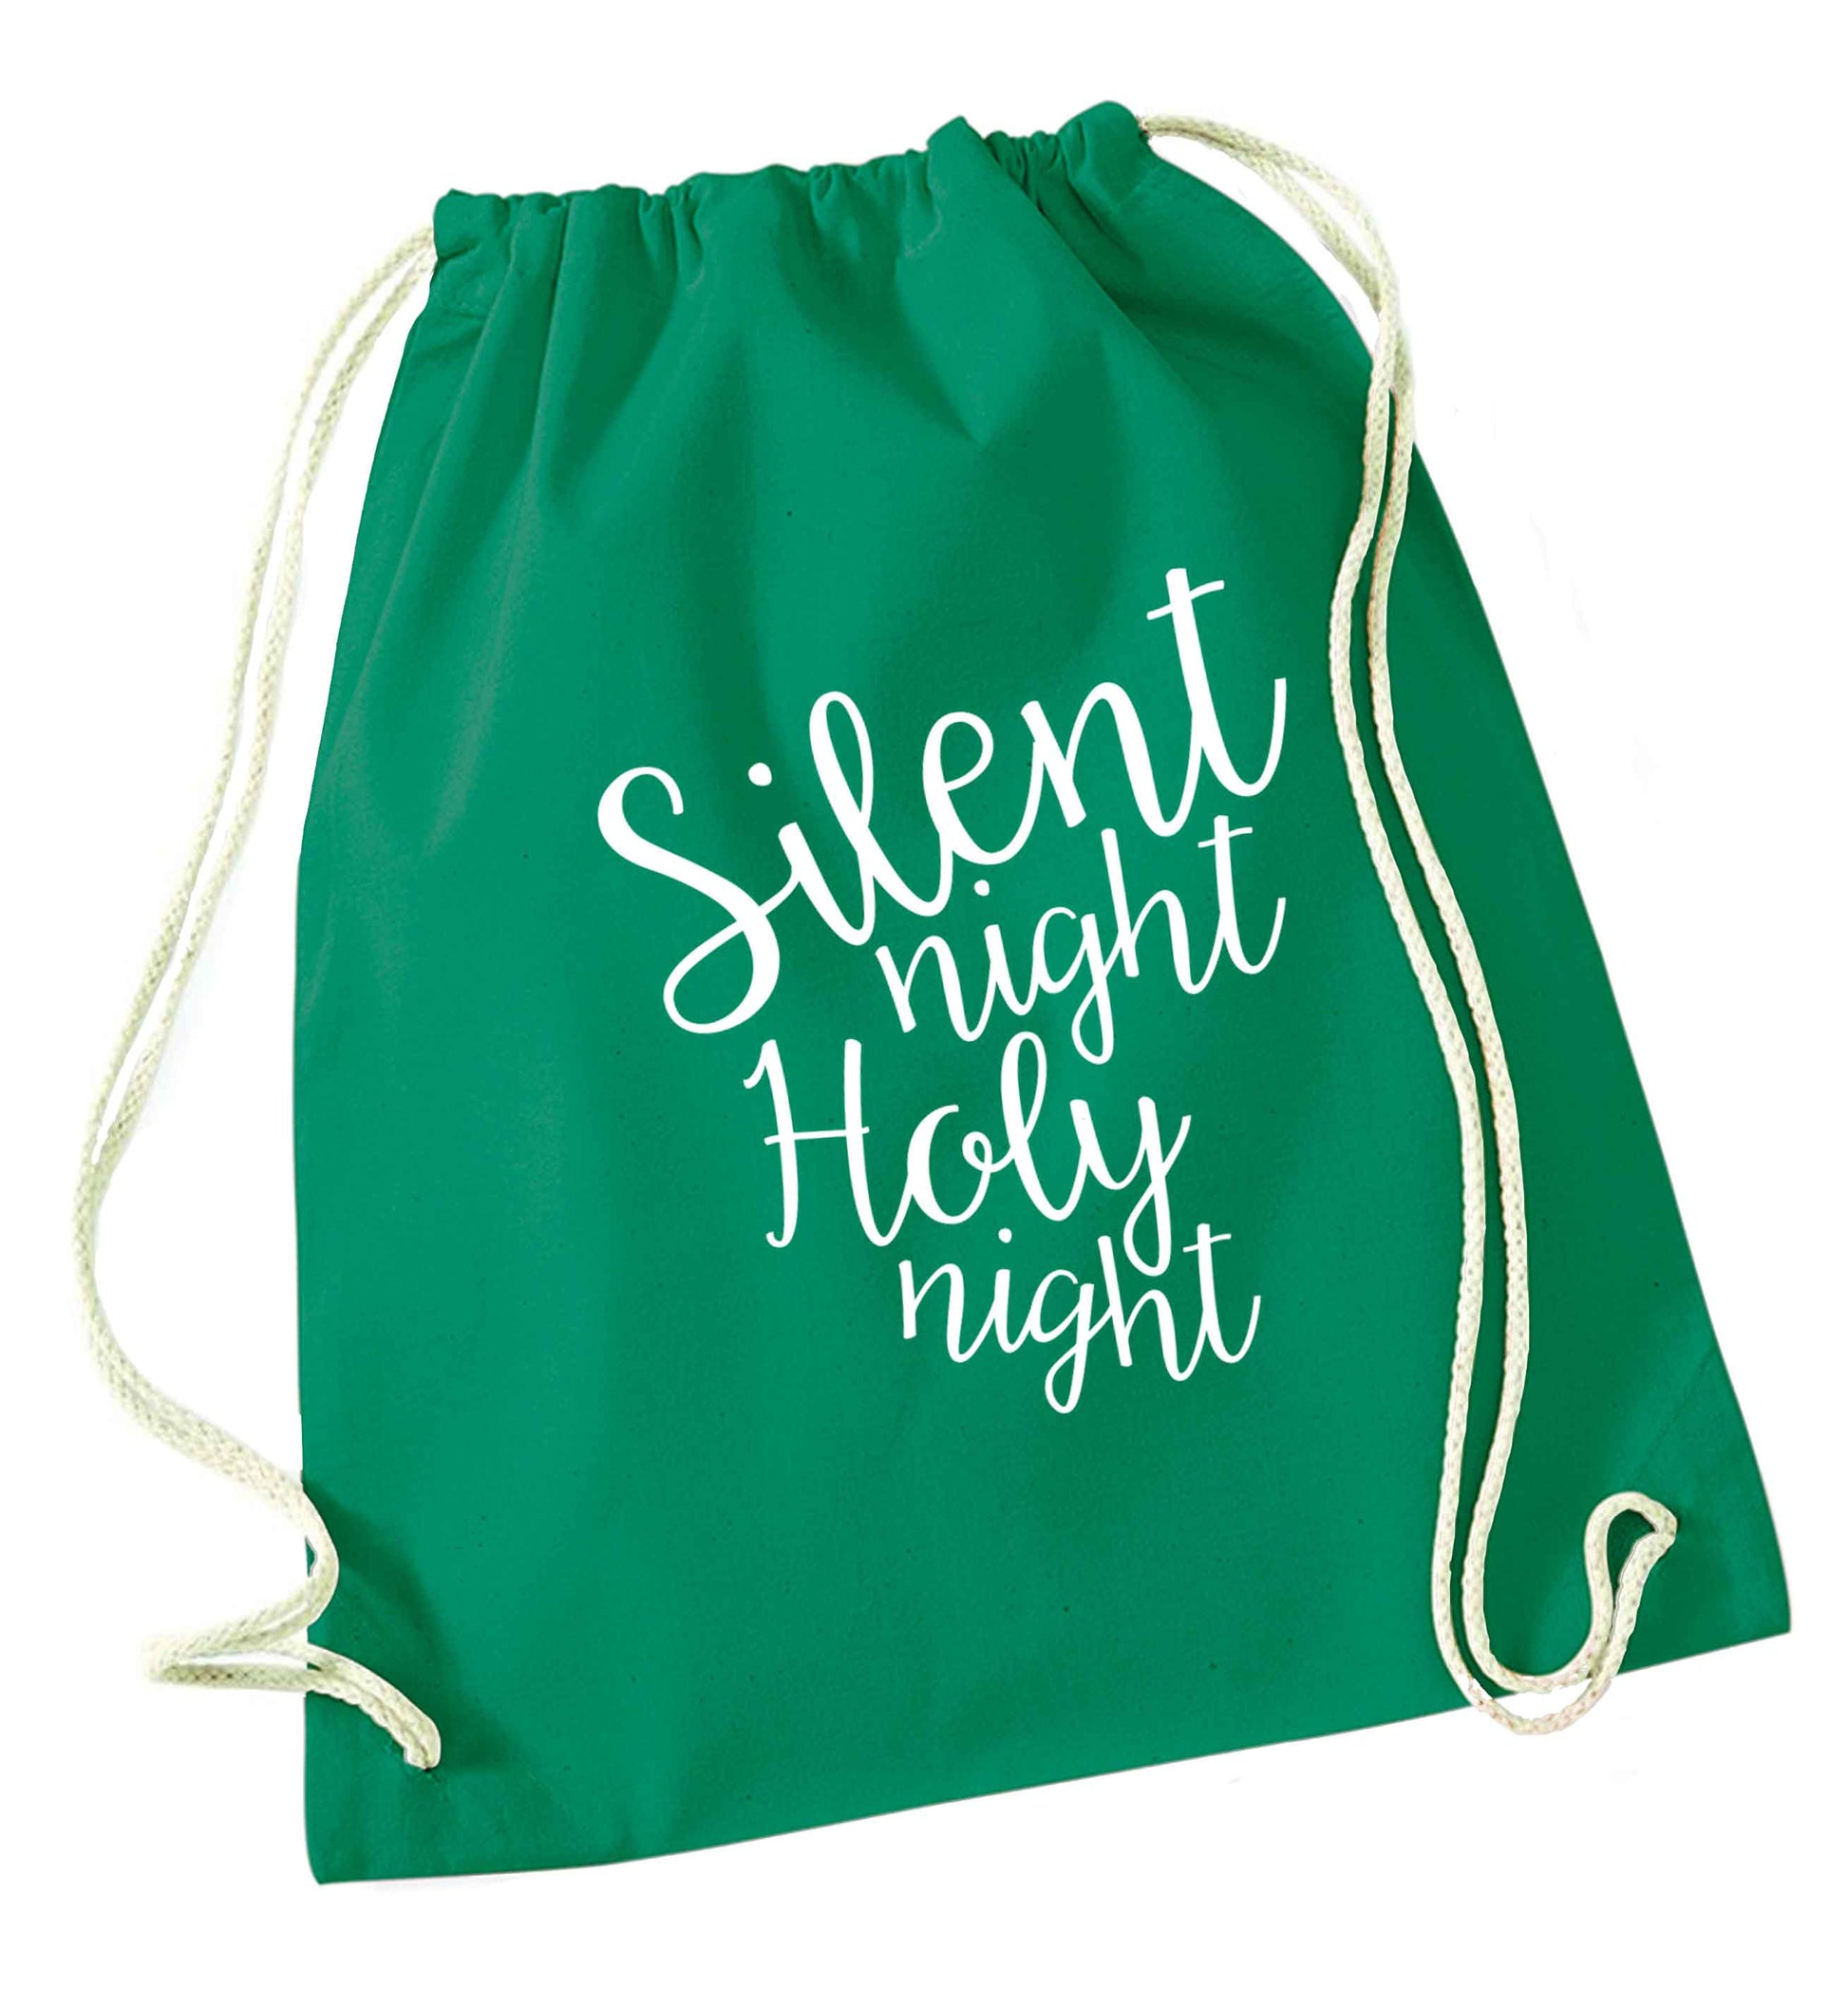 Silent night holy night green drawstring bag